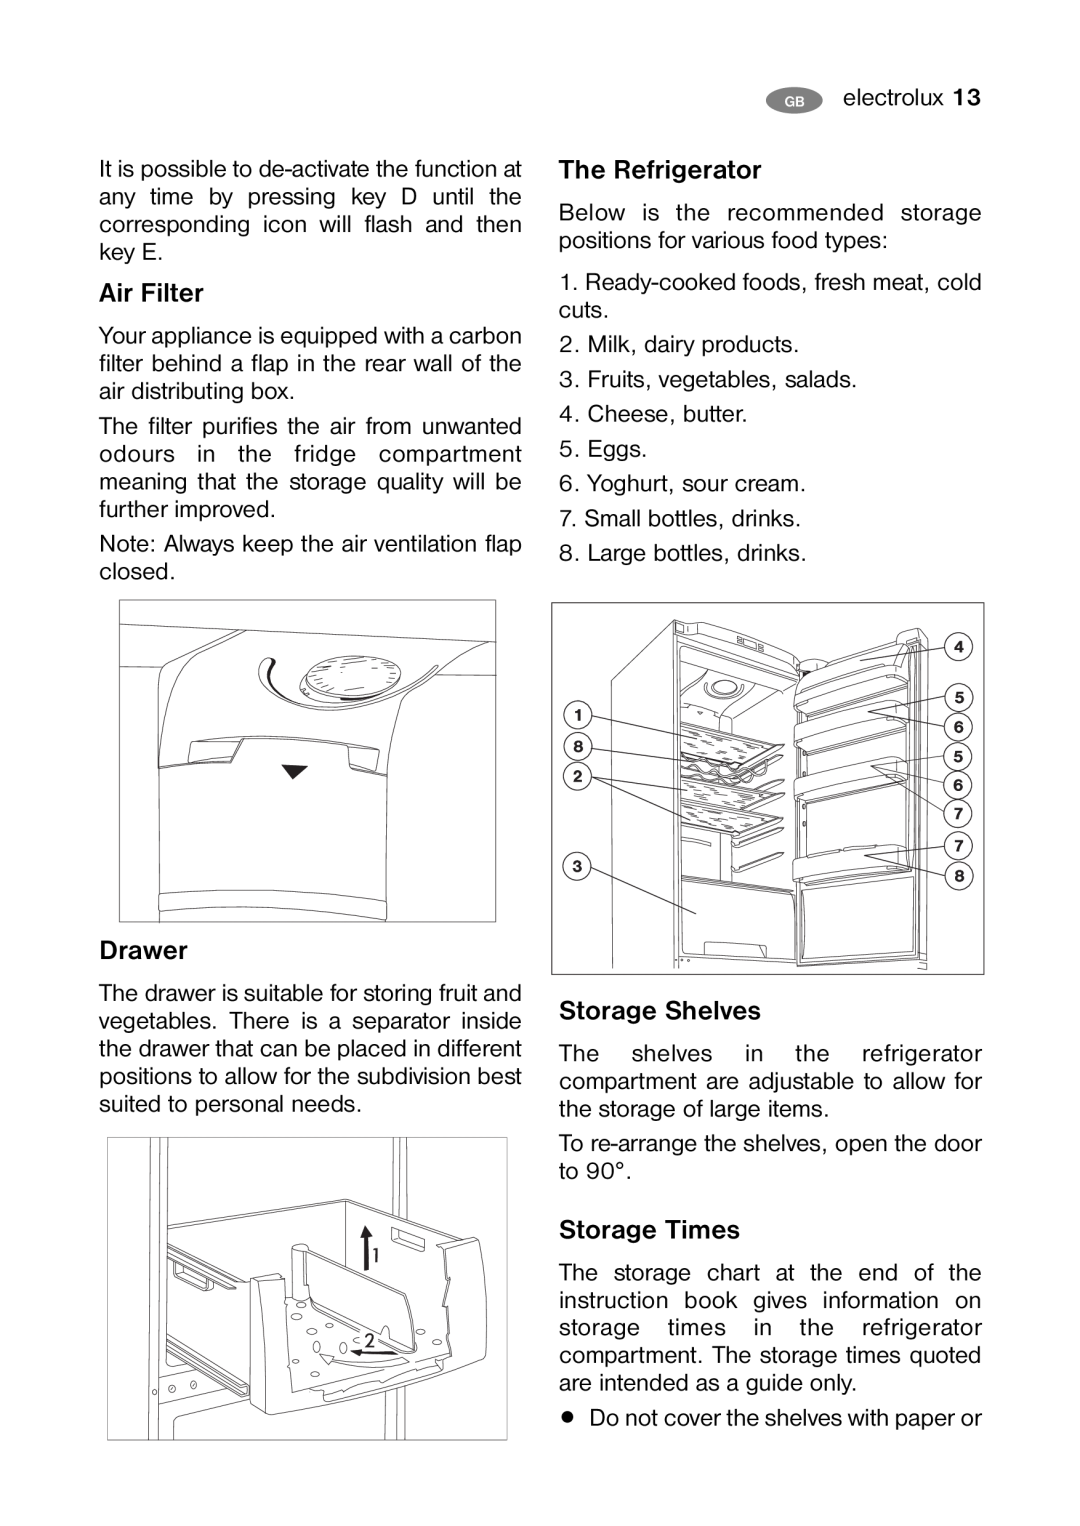 Electrolux ENB 40200 W user manual Air Filter, Drawer, The Refrigerator, Storage Shelves, Storage Times 